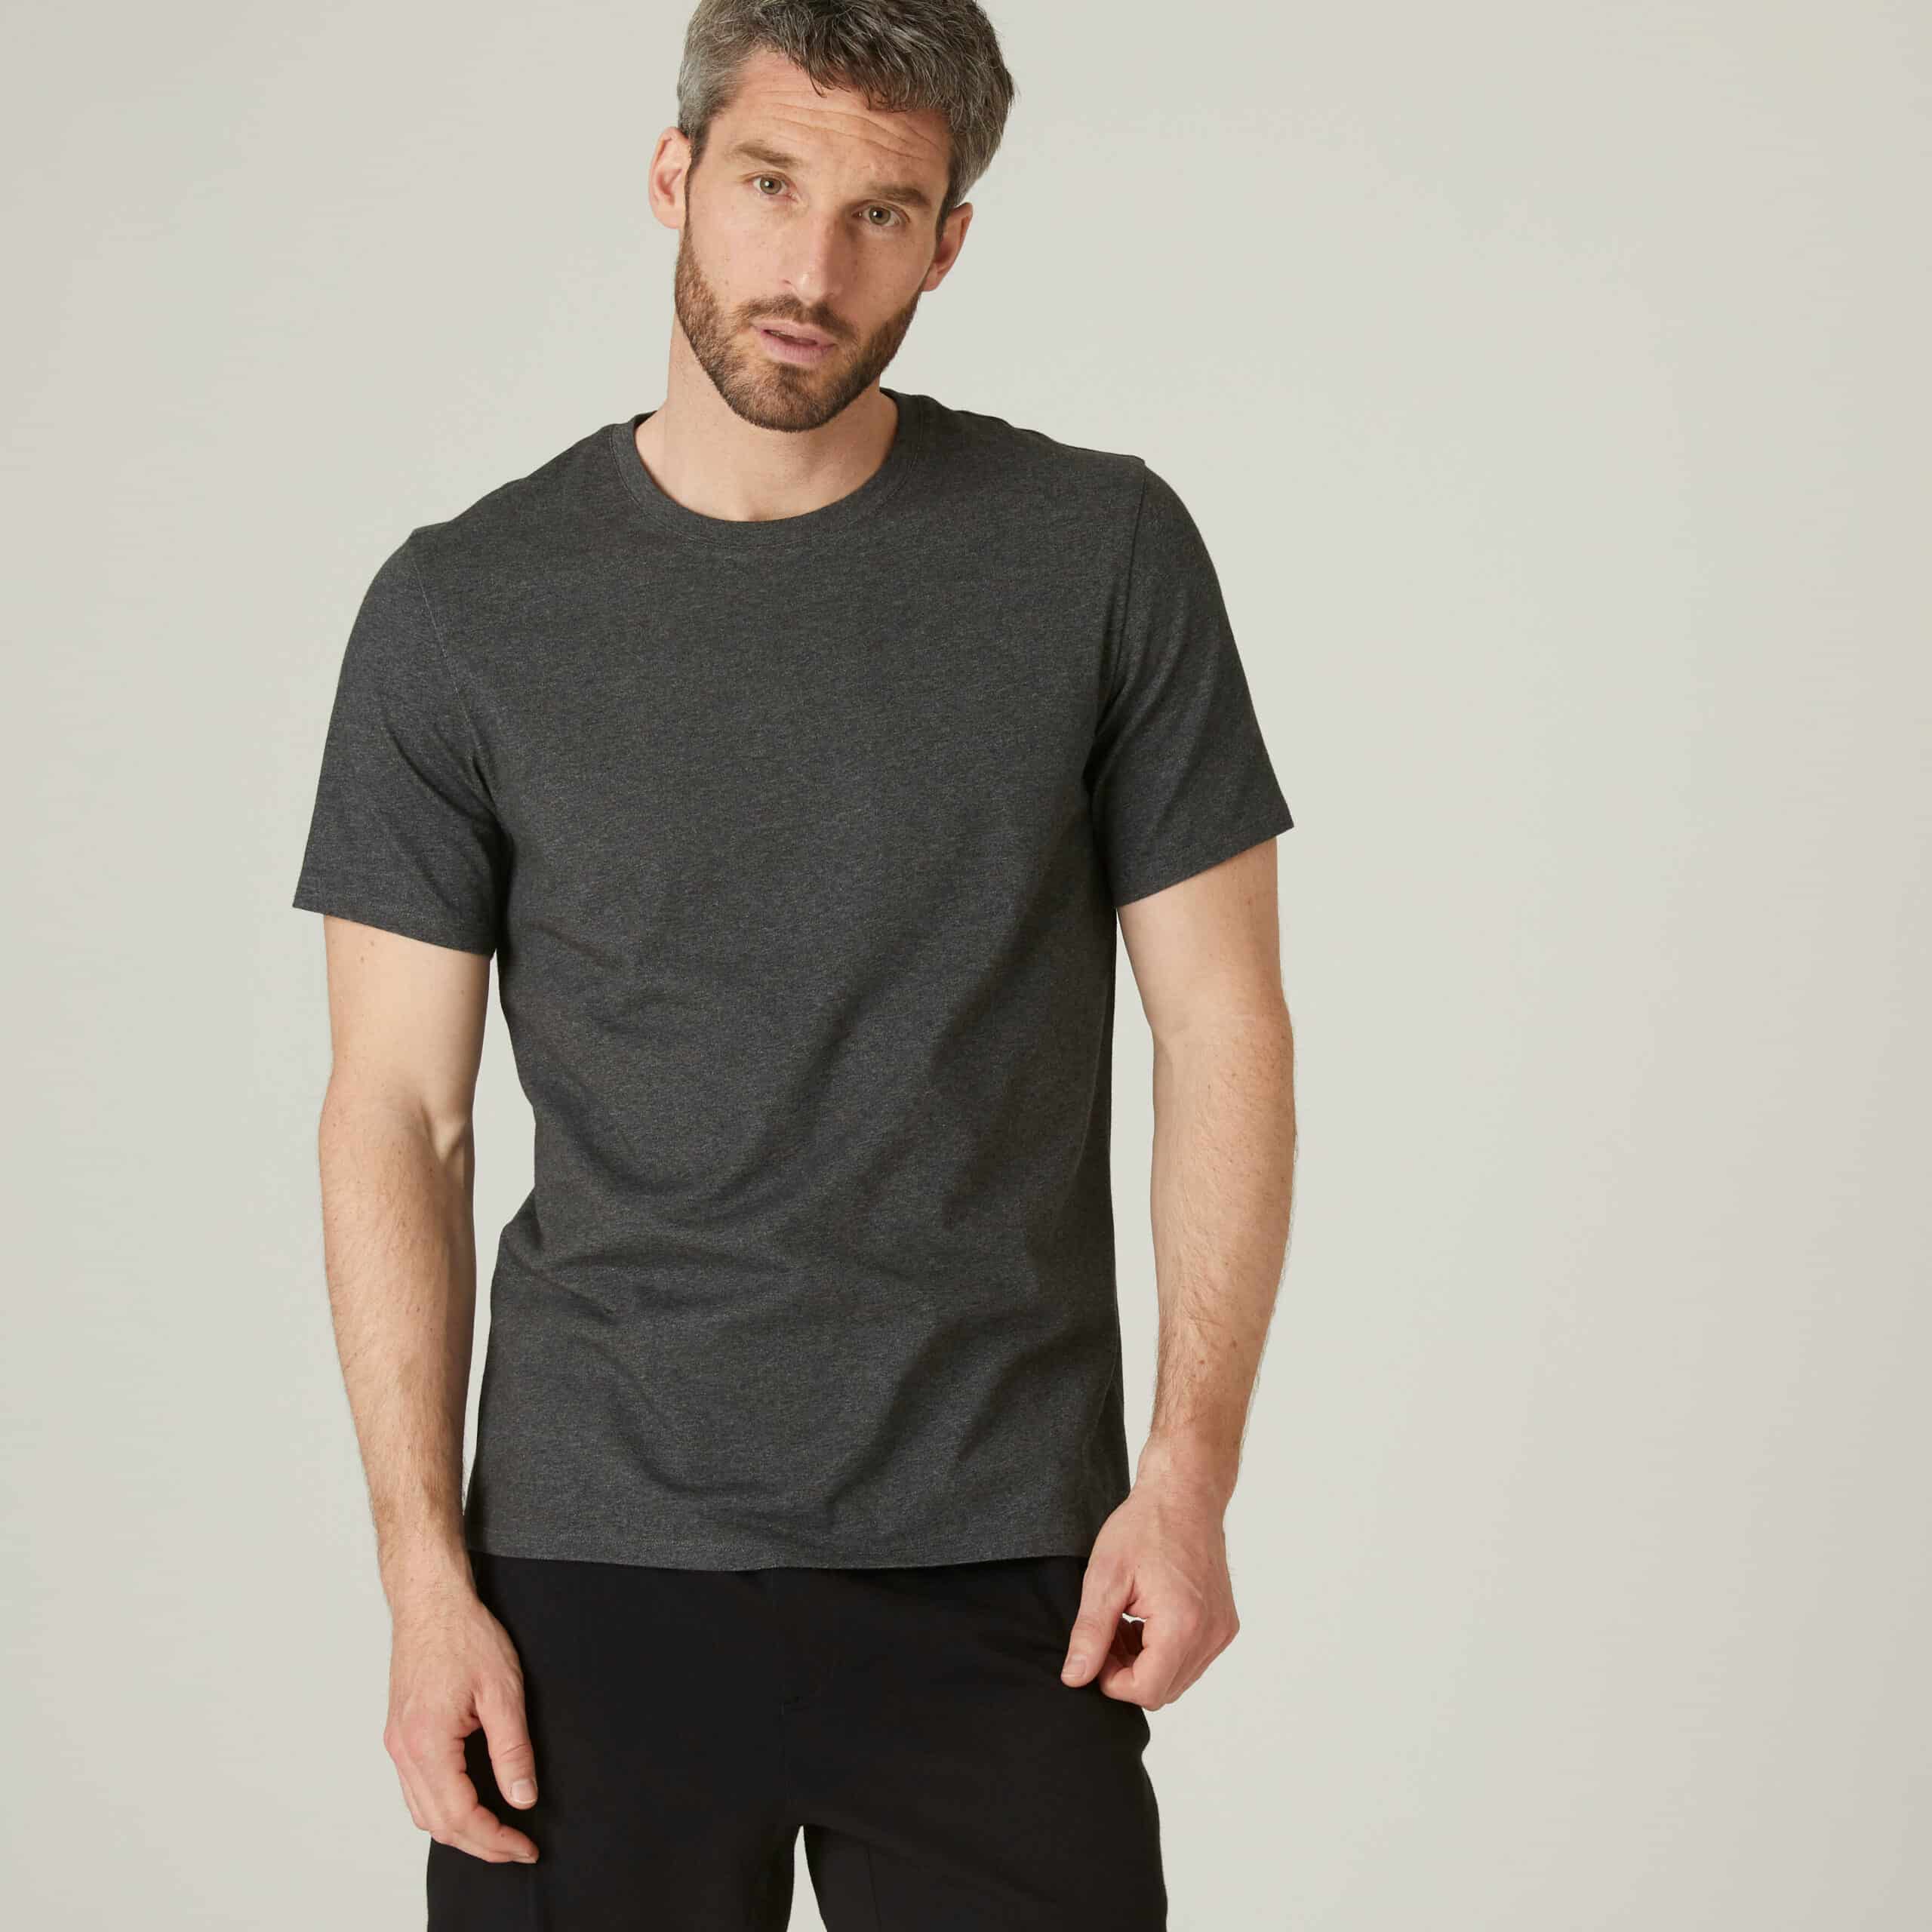 Domyos T-Shirt Herren Baumwolle Regular - 500 dunkelgrau